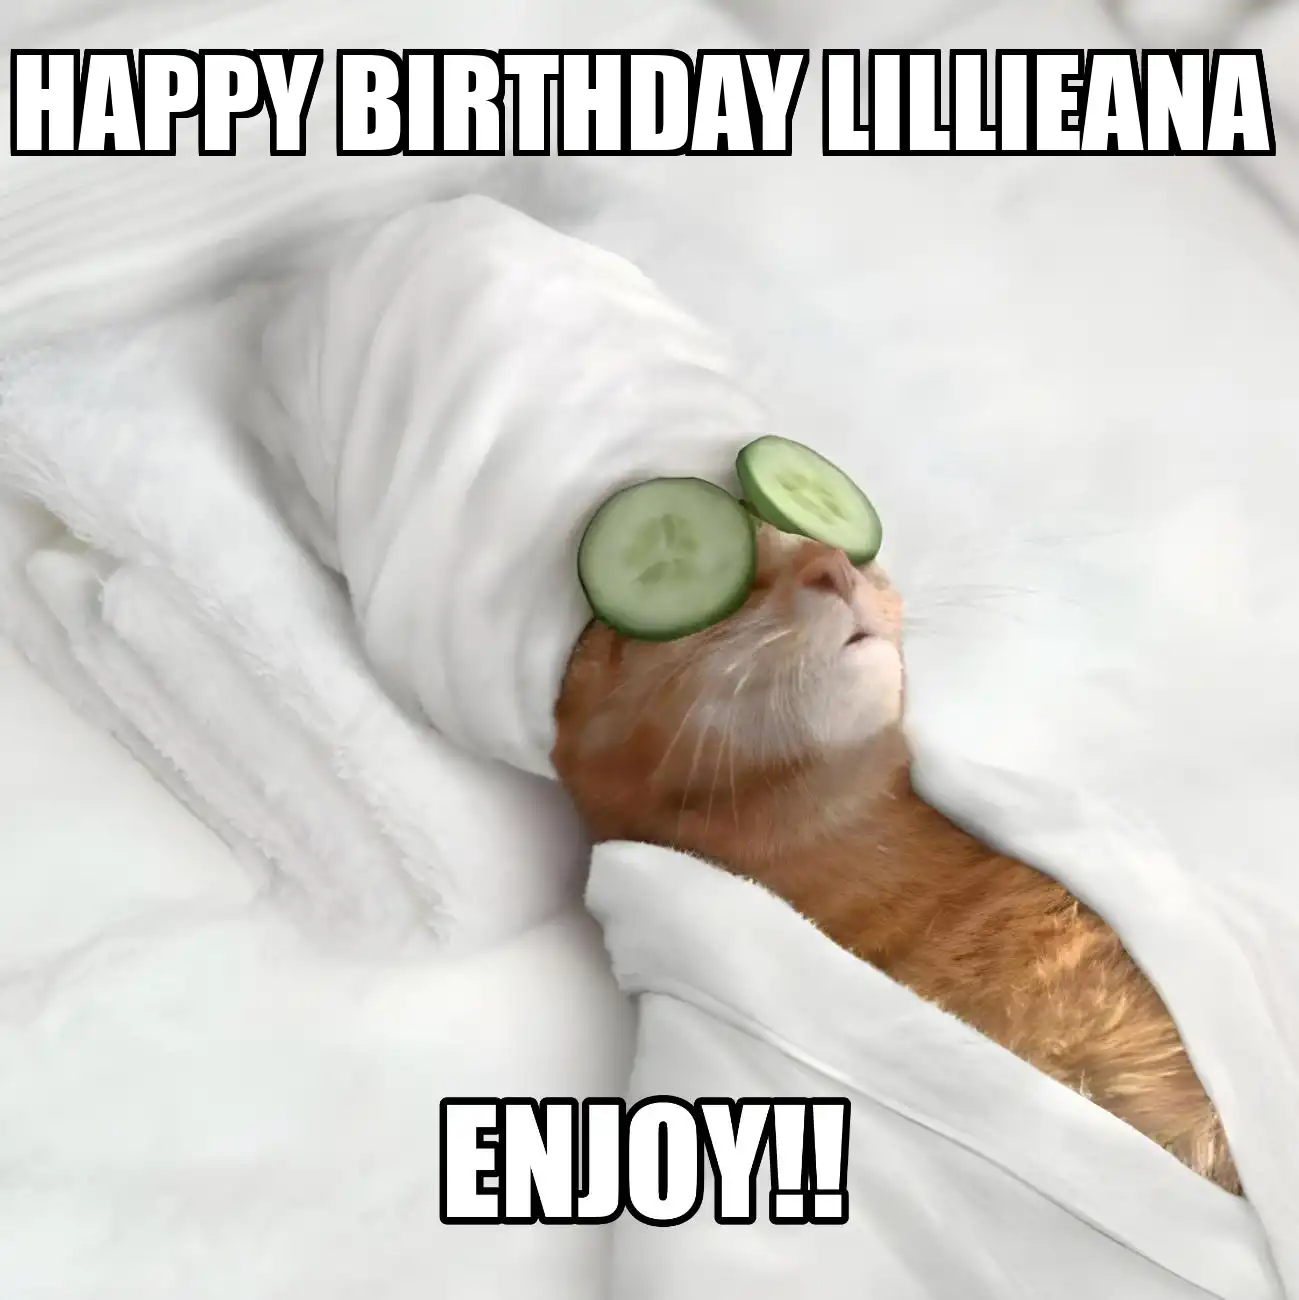 Happy Birthday Lillieana Enjoy Cat Meme